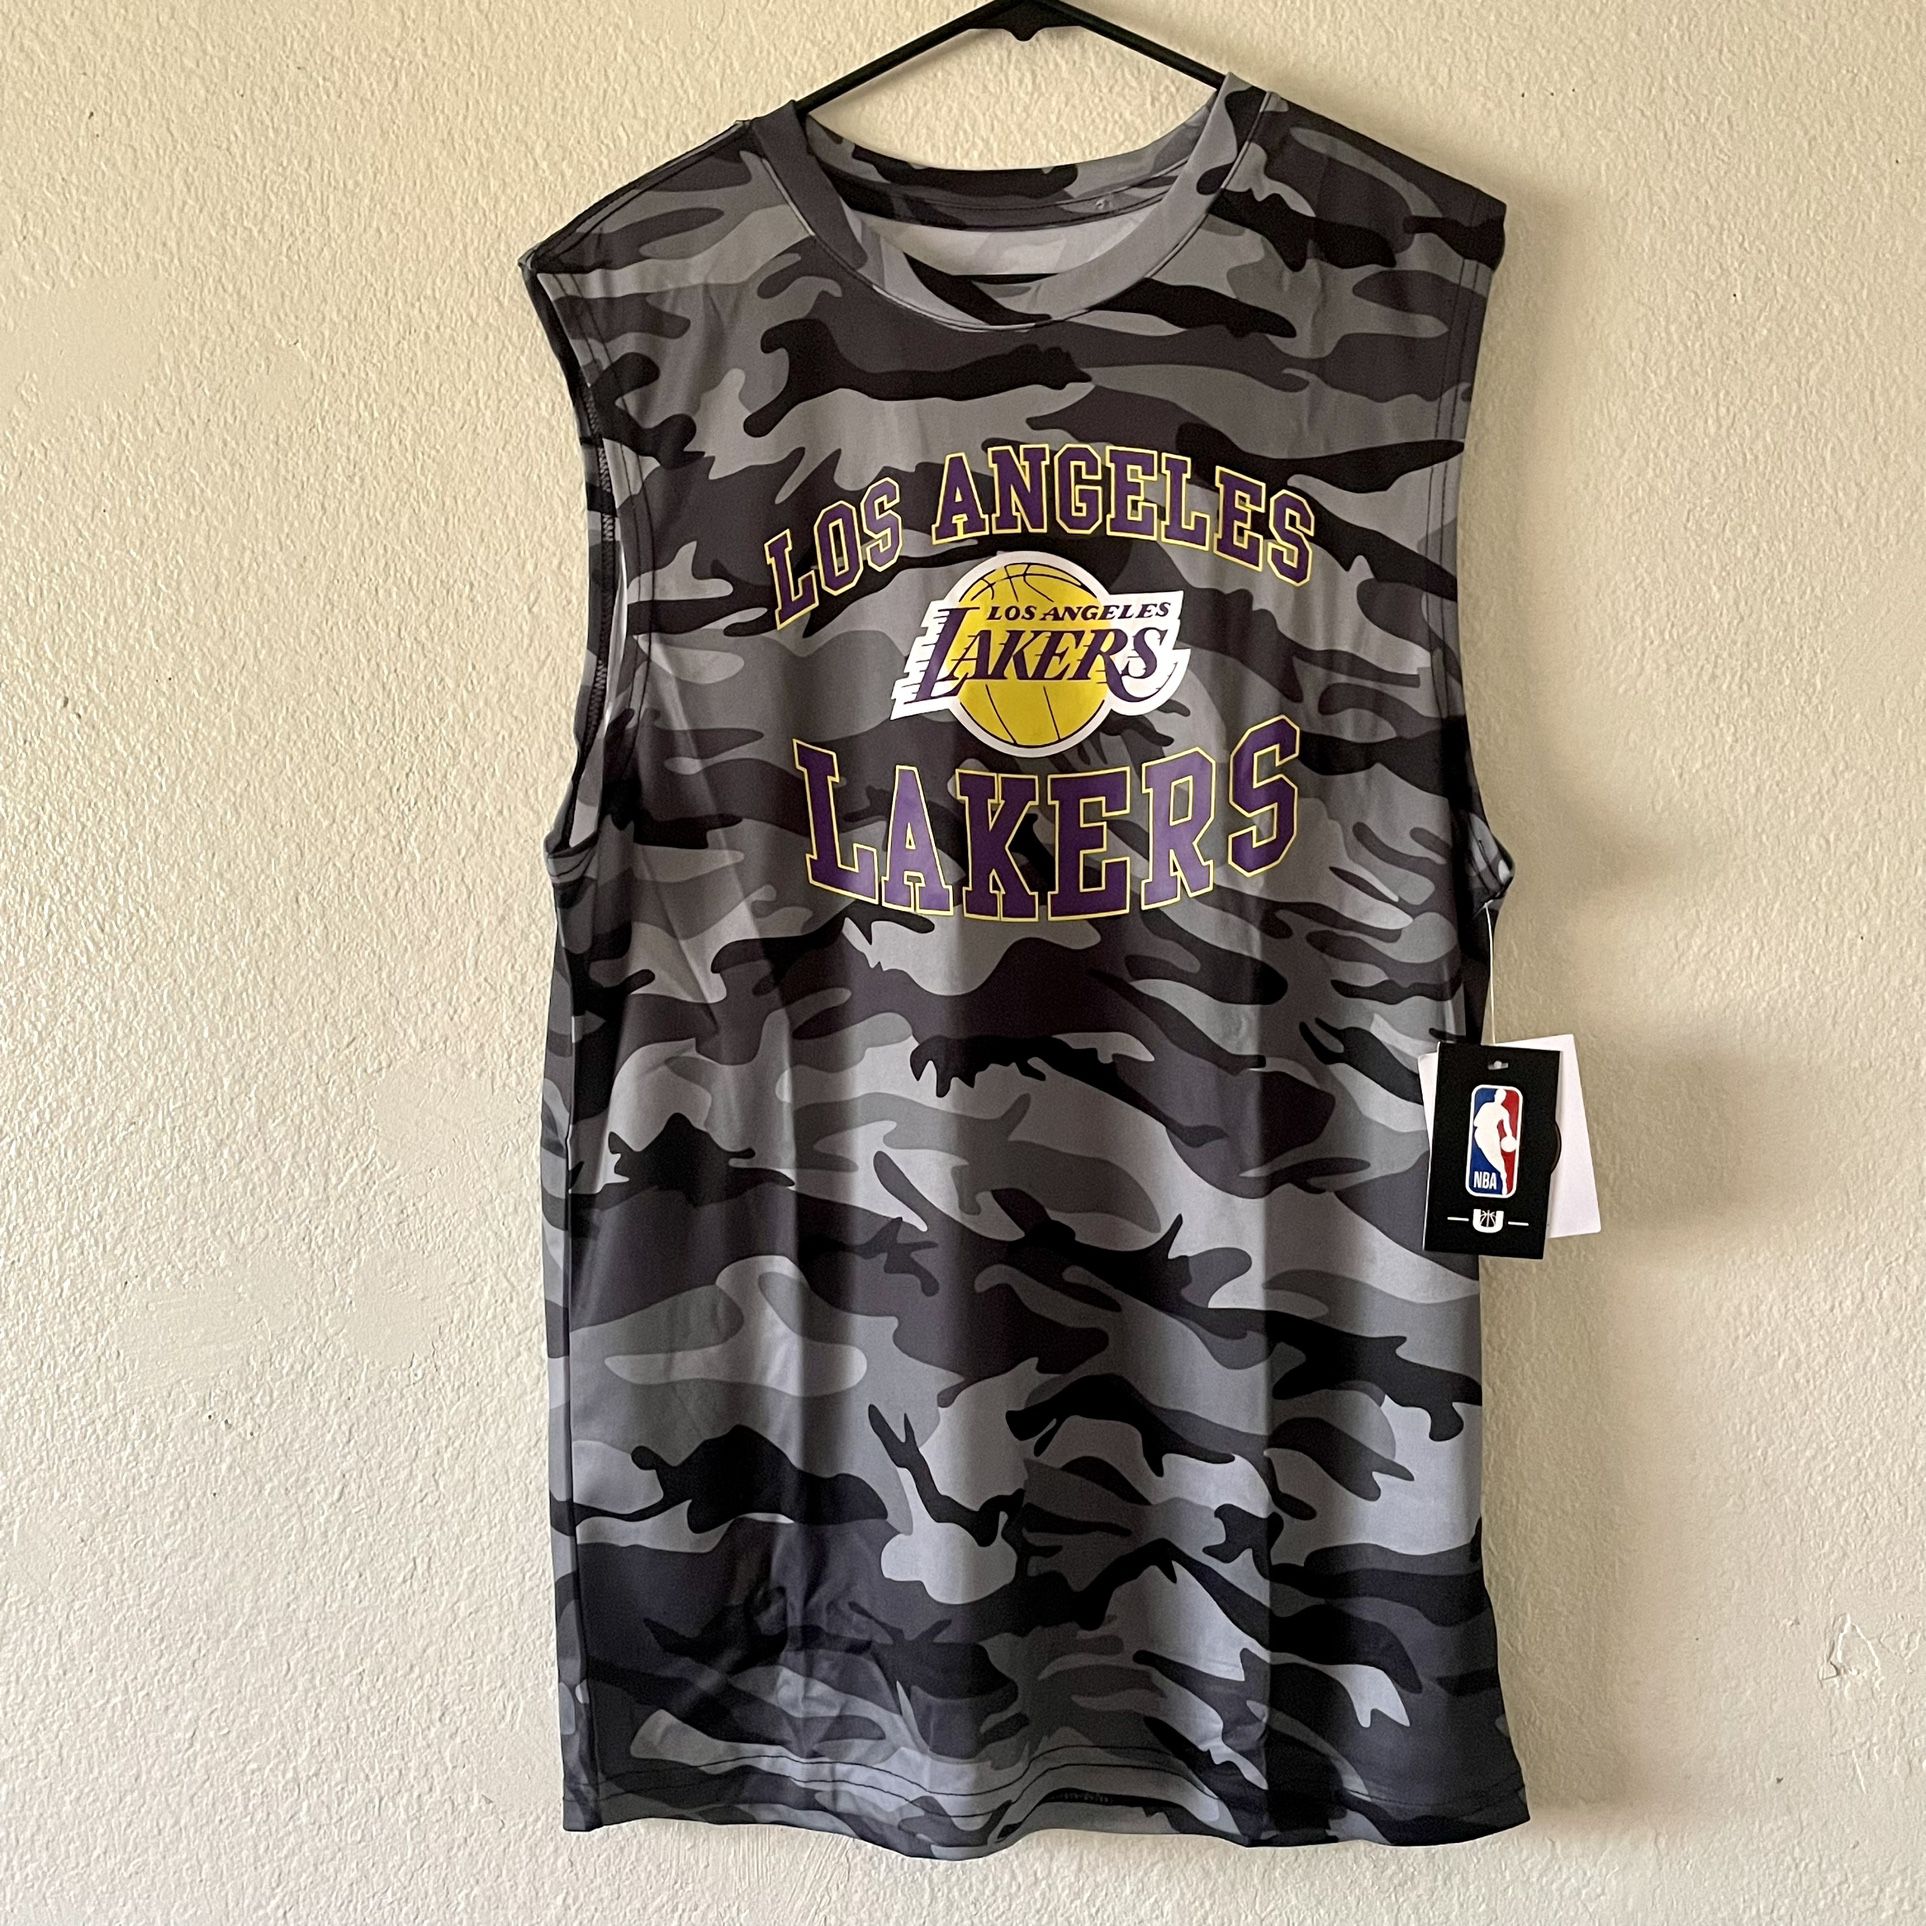 Unisex NBA LA Lakers Practice Jersey (M) for Sale in Eleven Mile, AZ -  OfferUp